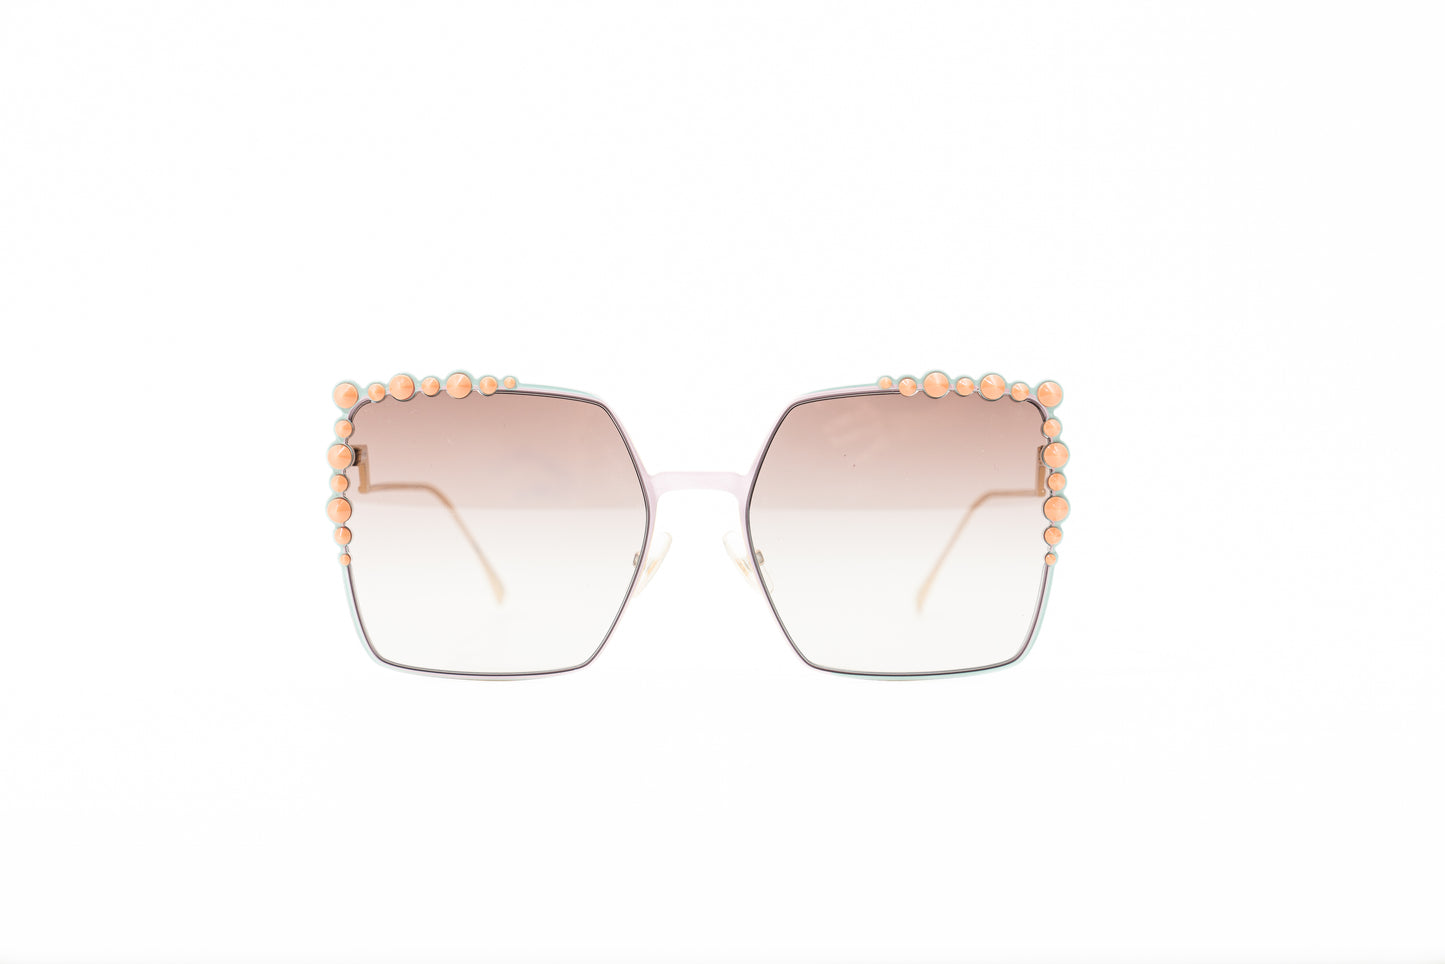 Fendi Sunglasses in Peony Pink